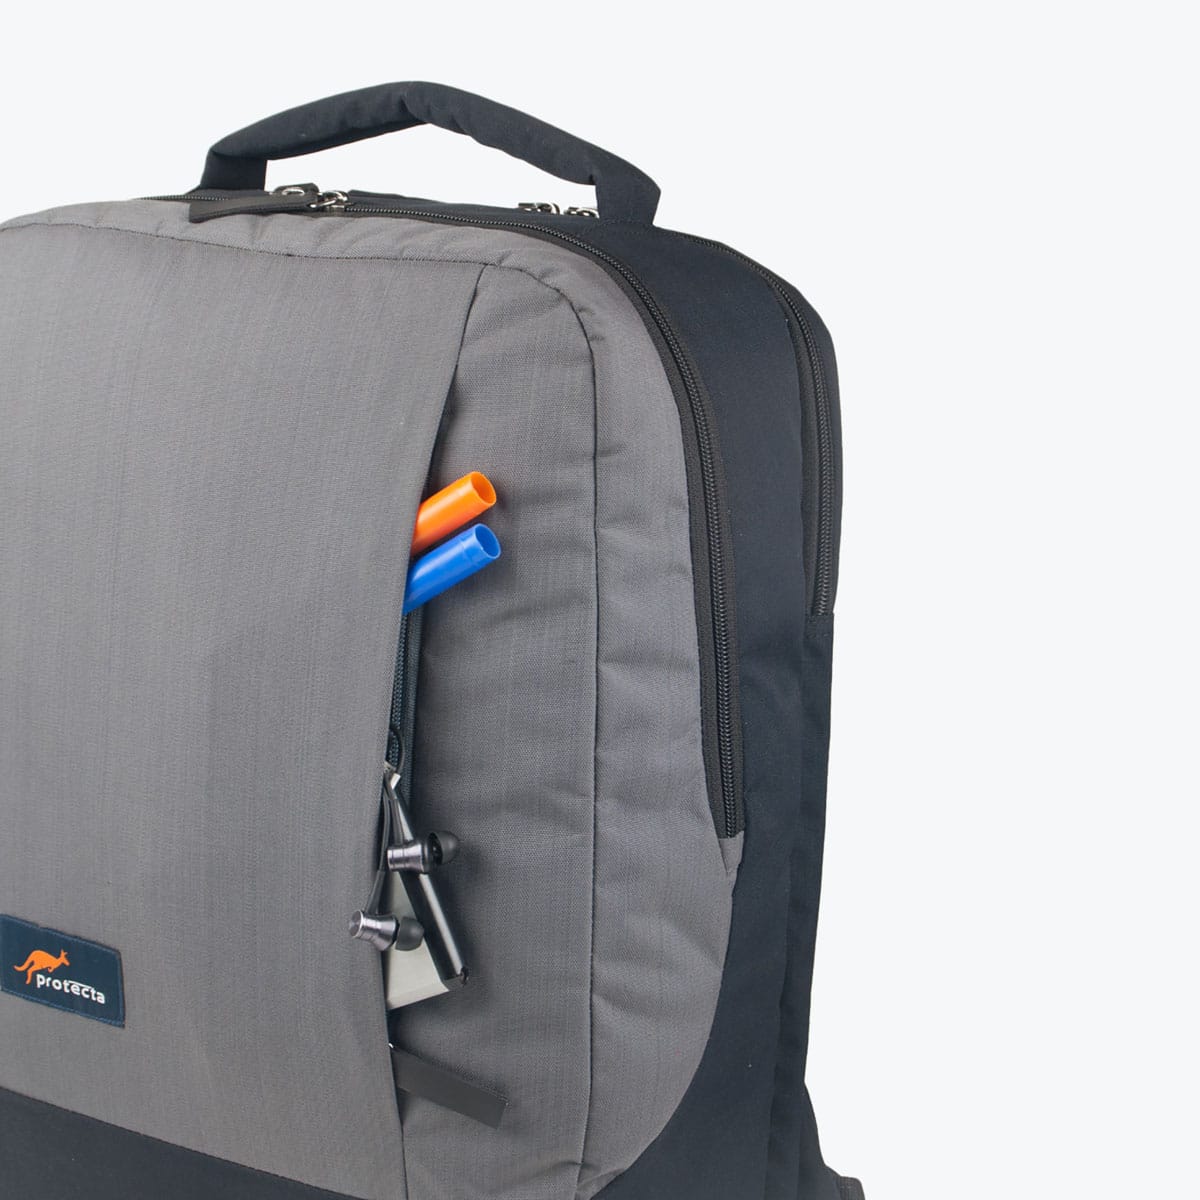 Buy Kopack Lightweight Laptop Backpack Water Resistant College School Large Travel  Bag at Amazon.in